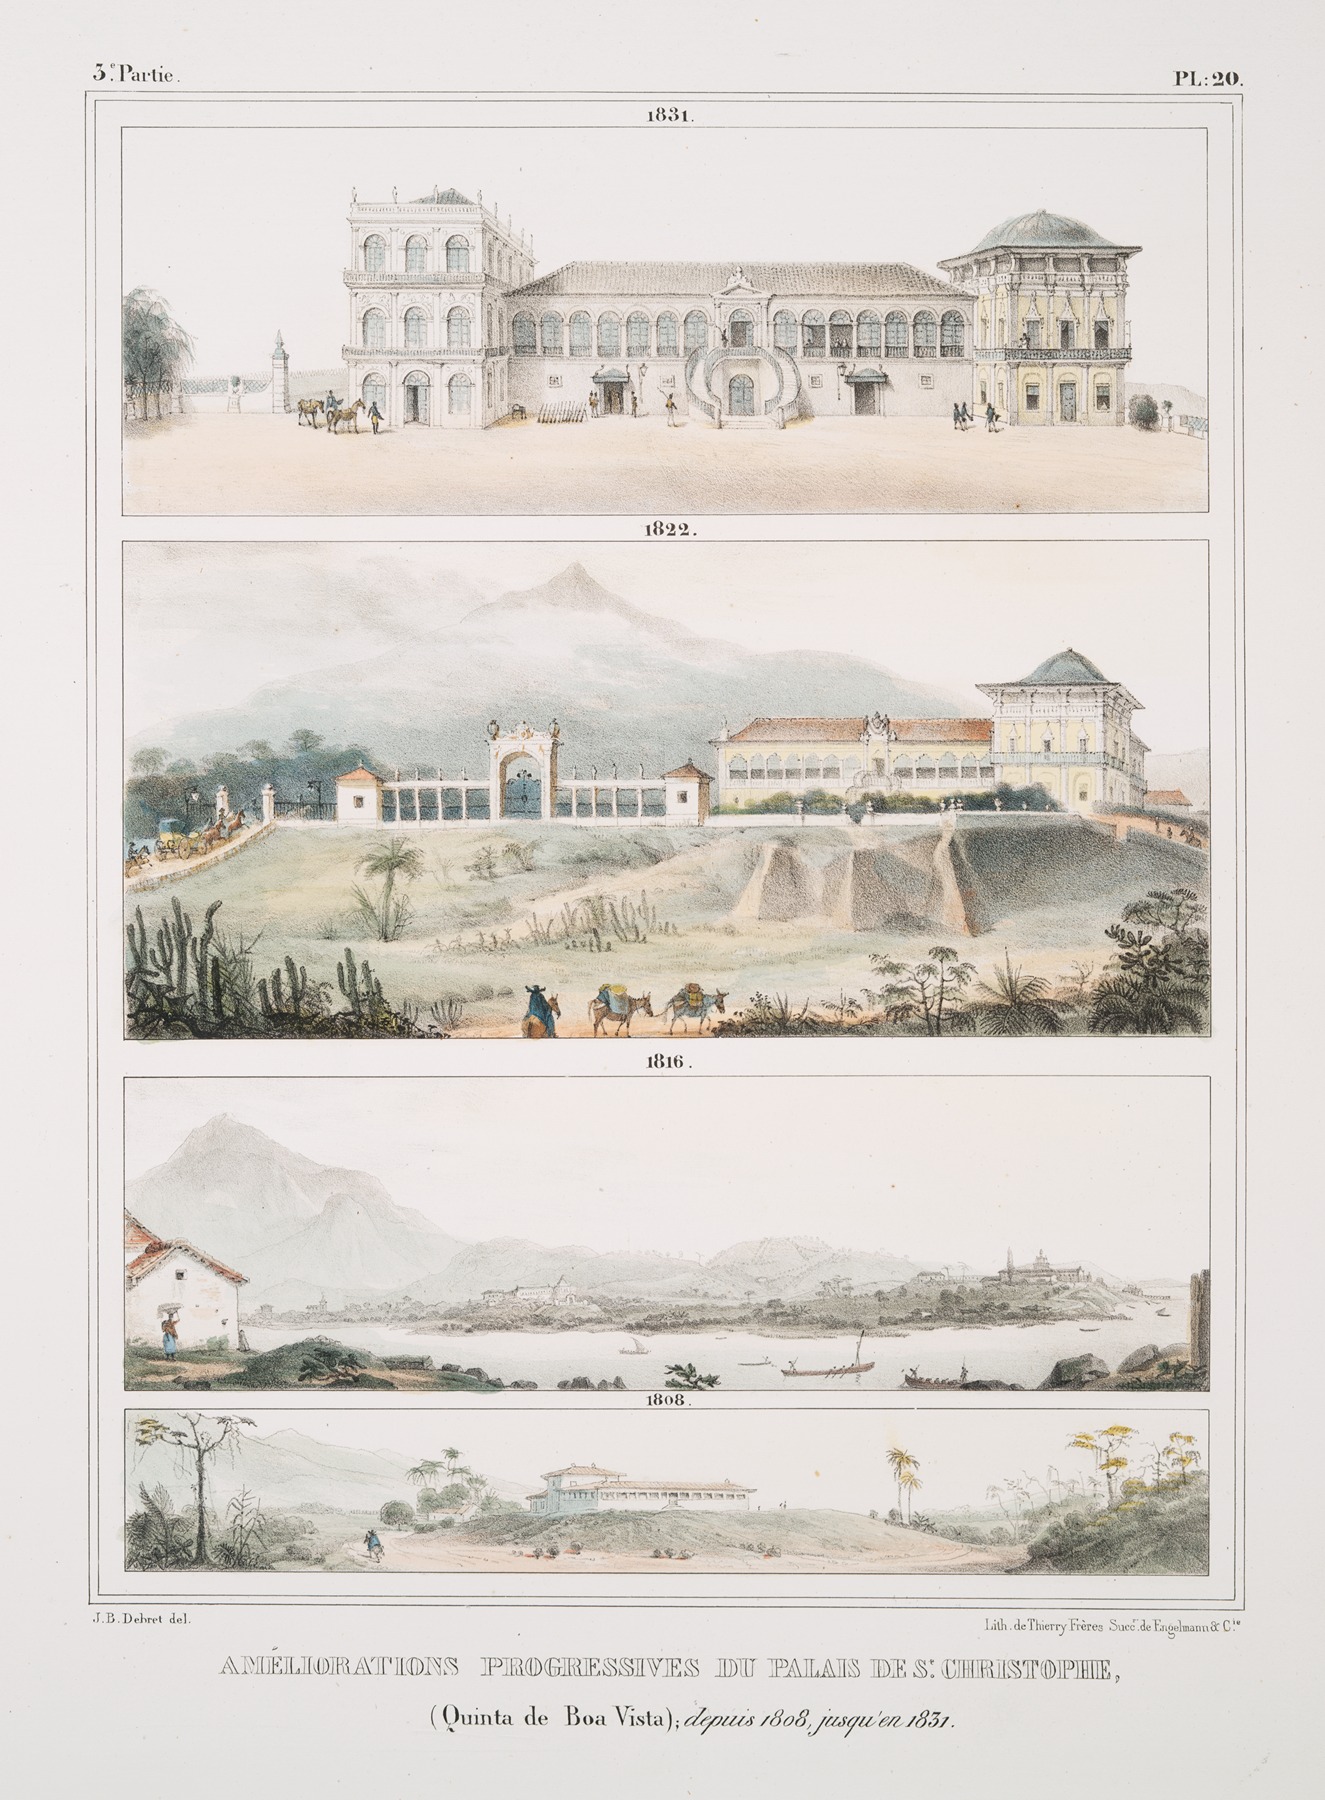 Jean Baptiste Debret - Améliorations progressives du Palais de St. Christophe (Quinta de Boa Vista), depuis 1808 jusqu’en 1831